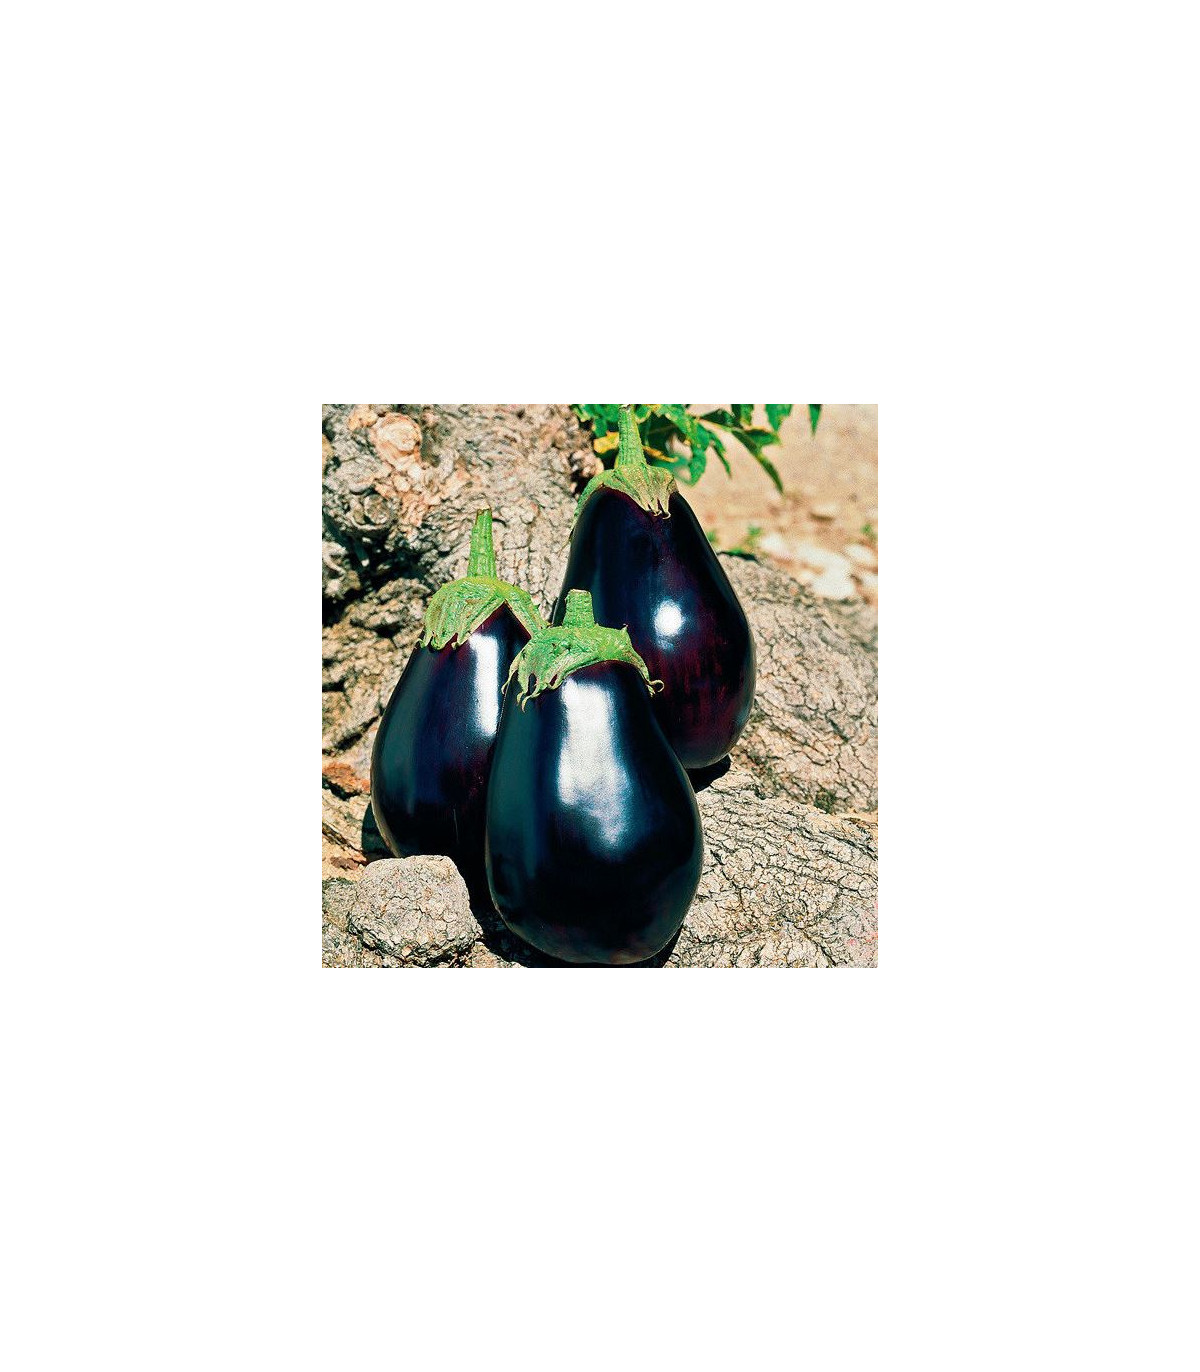 Baklažán skorý český - Solanum melongena - semená - 100 ks